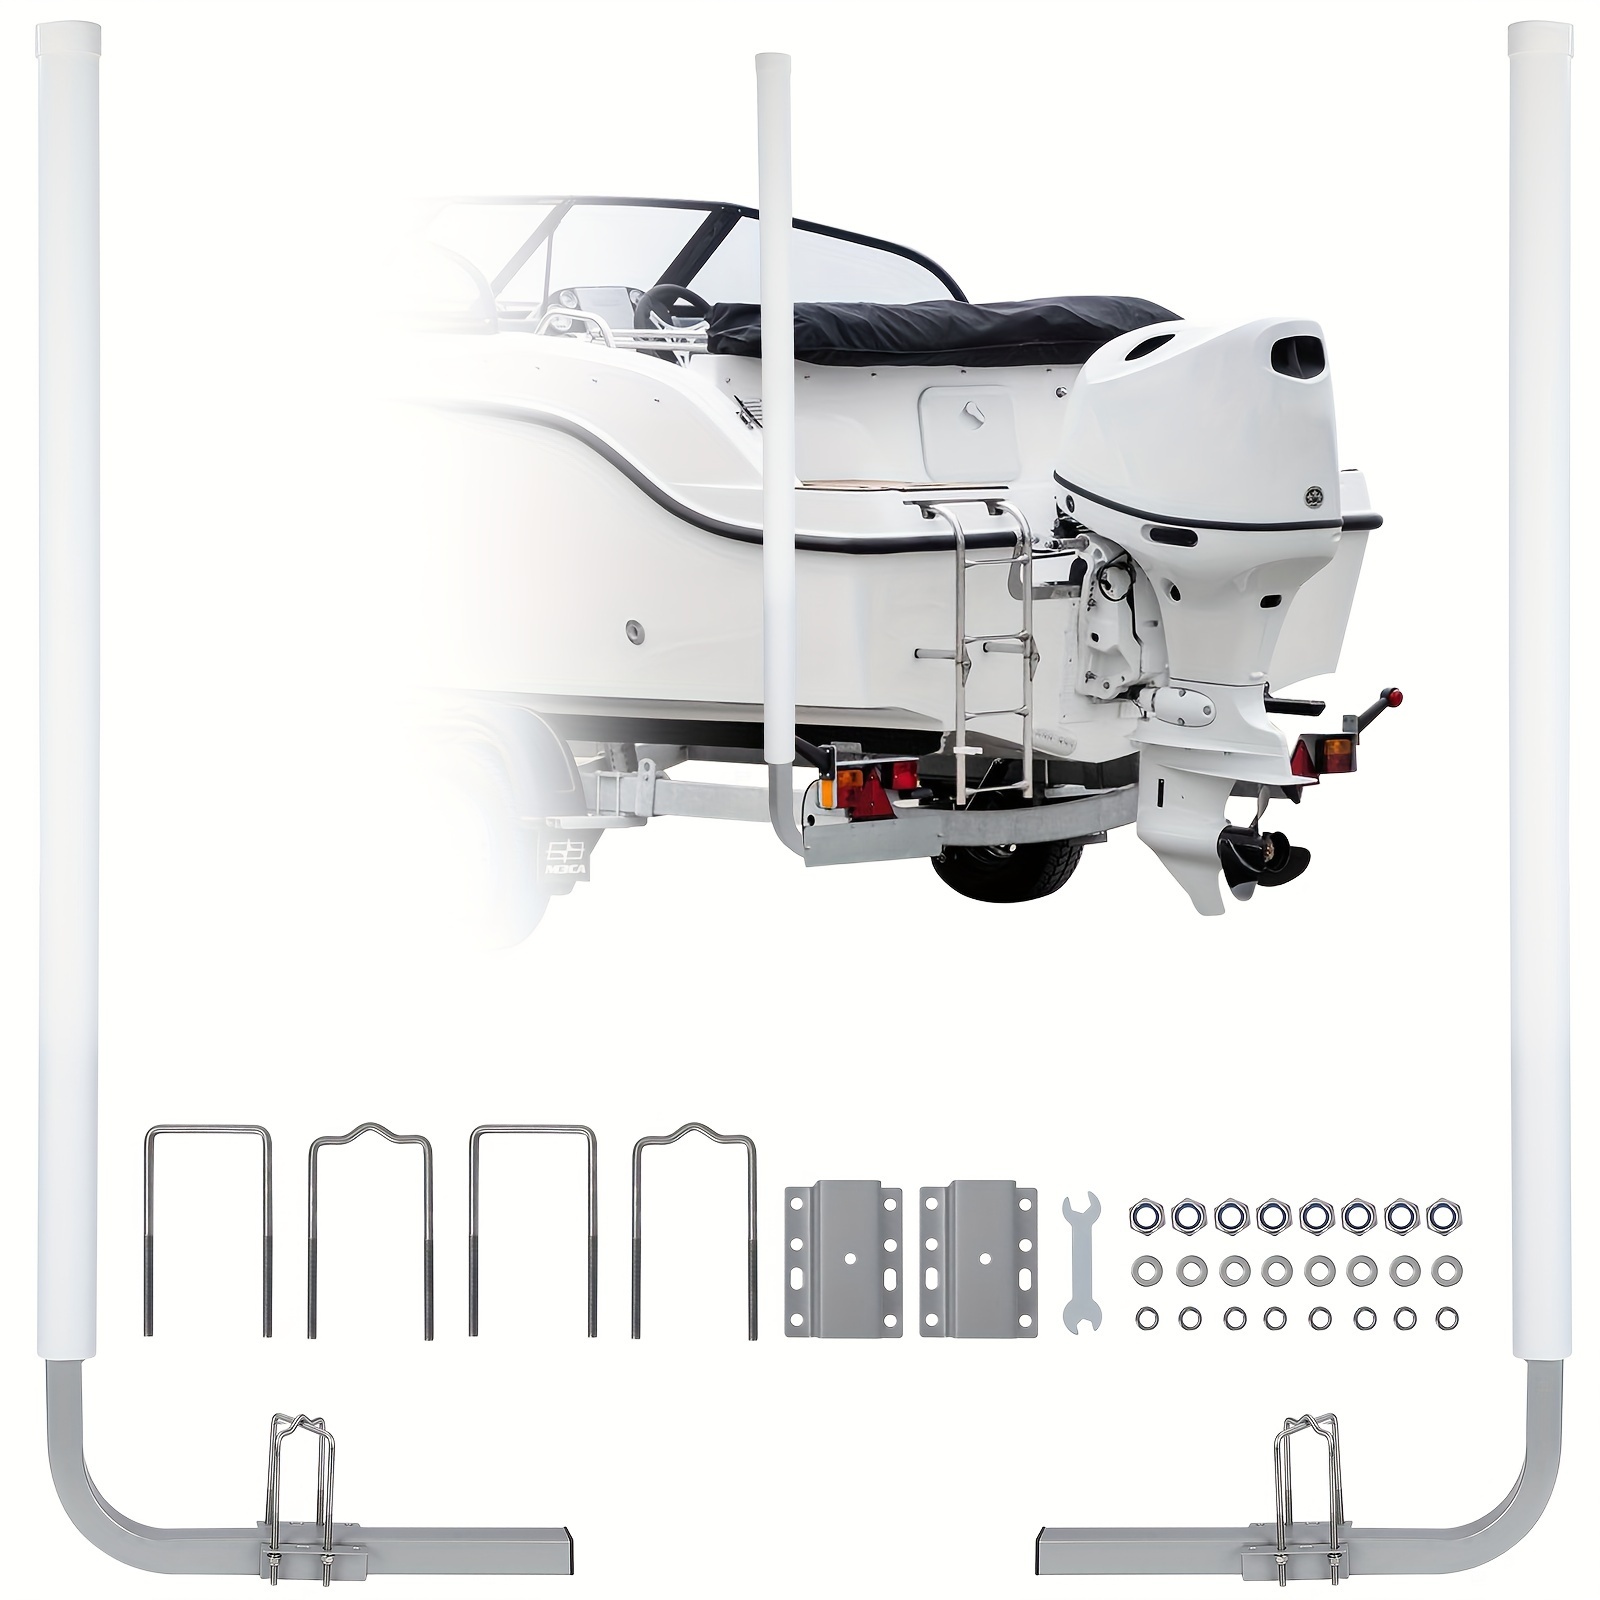 

2pcs Boat Trailer Guide, 60" Adjustable Design Trailer Guide Poles, Rustproof Galvanized Steel Trailer Guide, Trailer Guides With Pvc Pipes Without Light